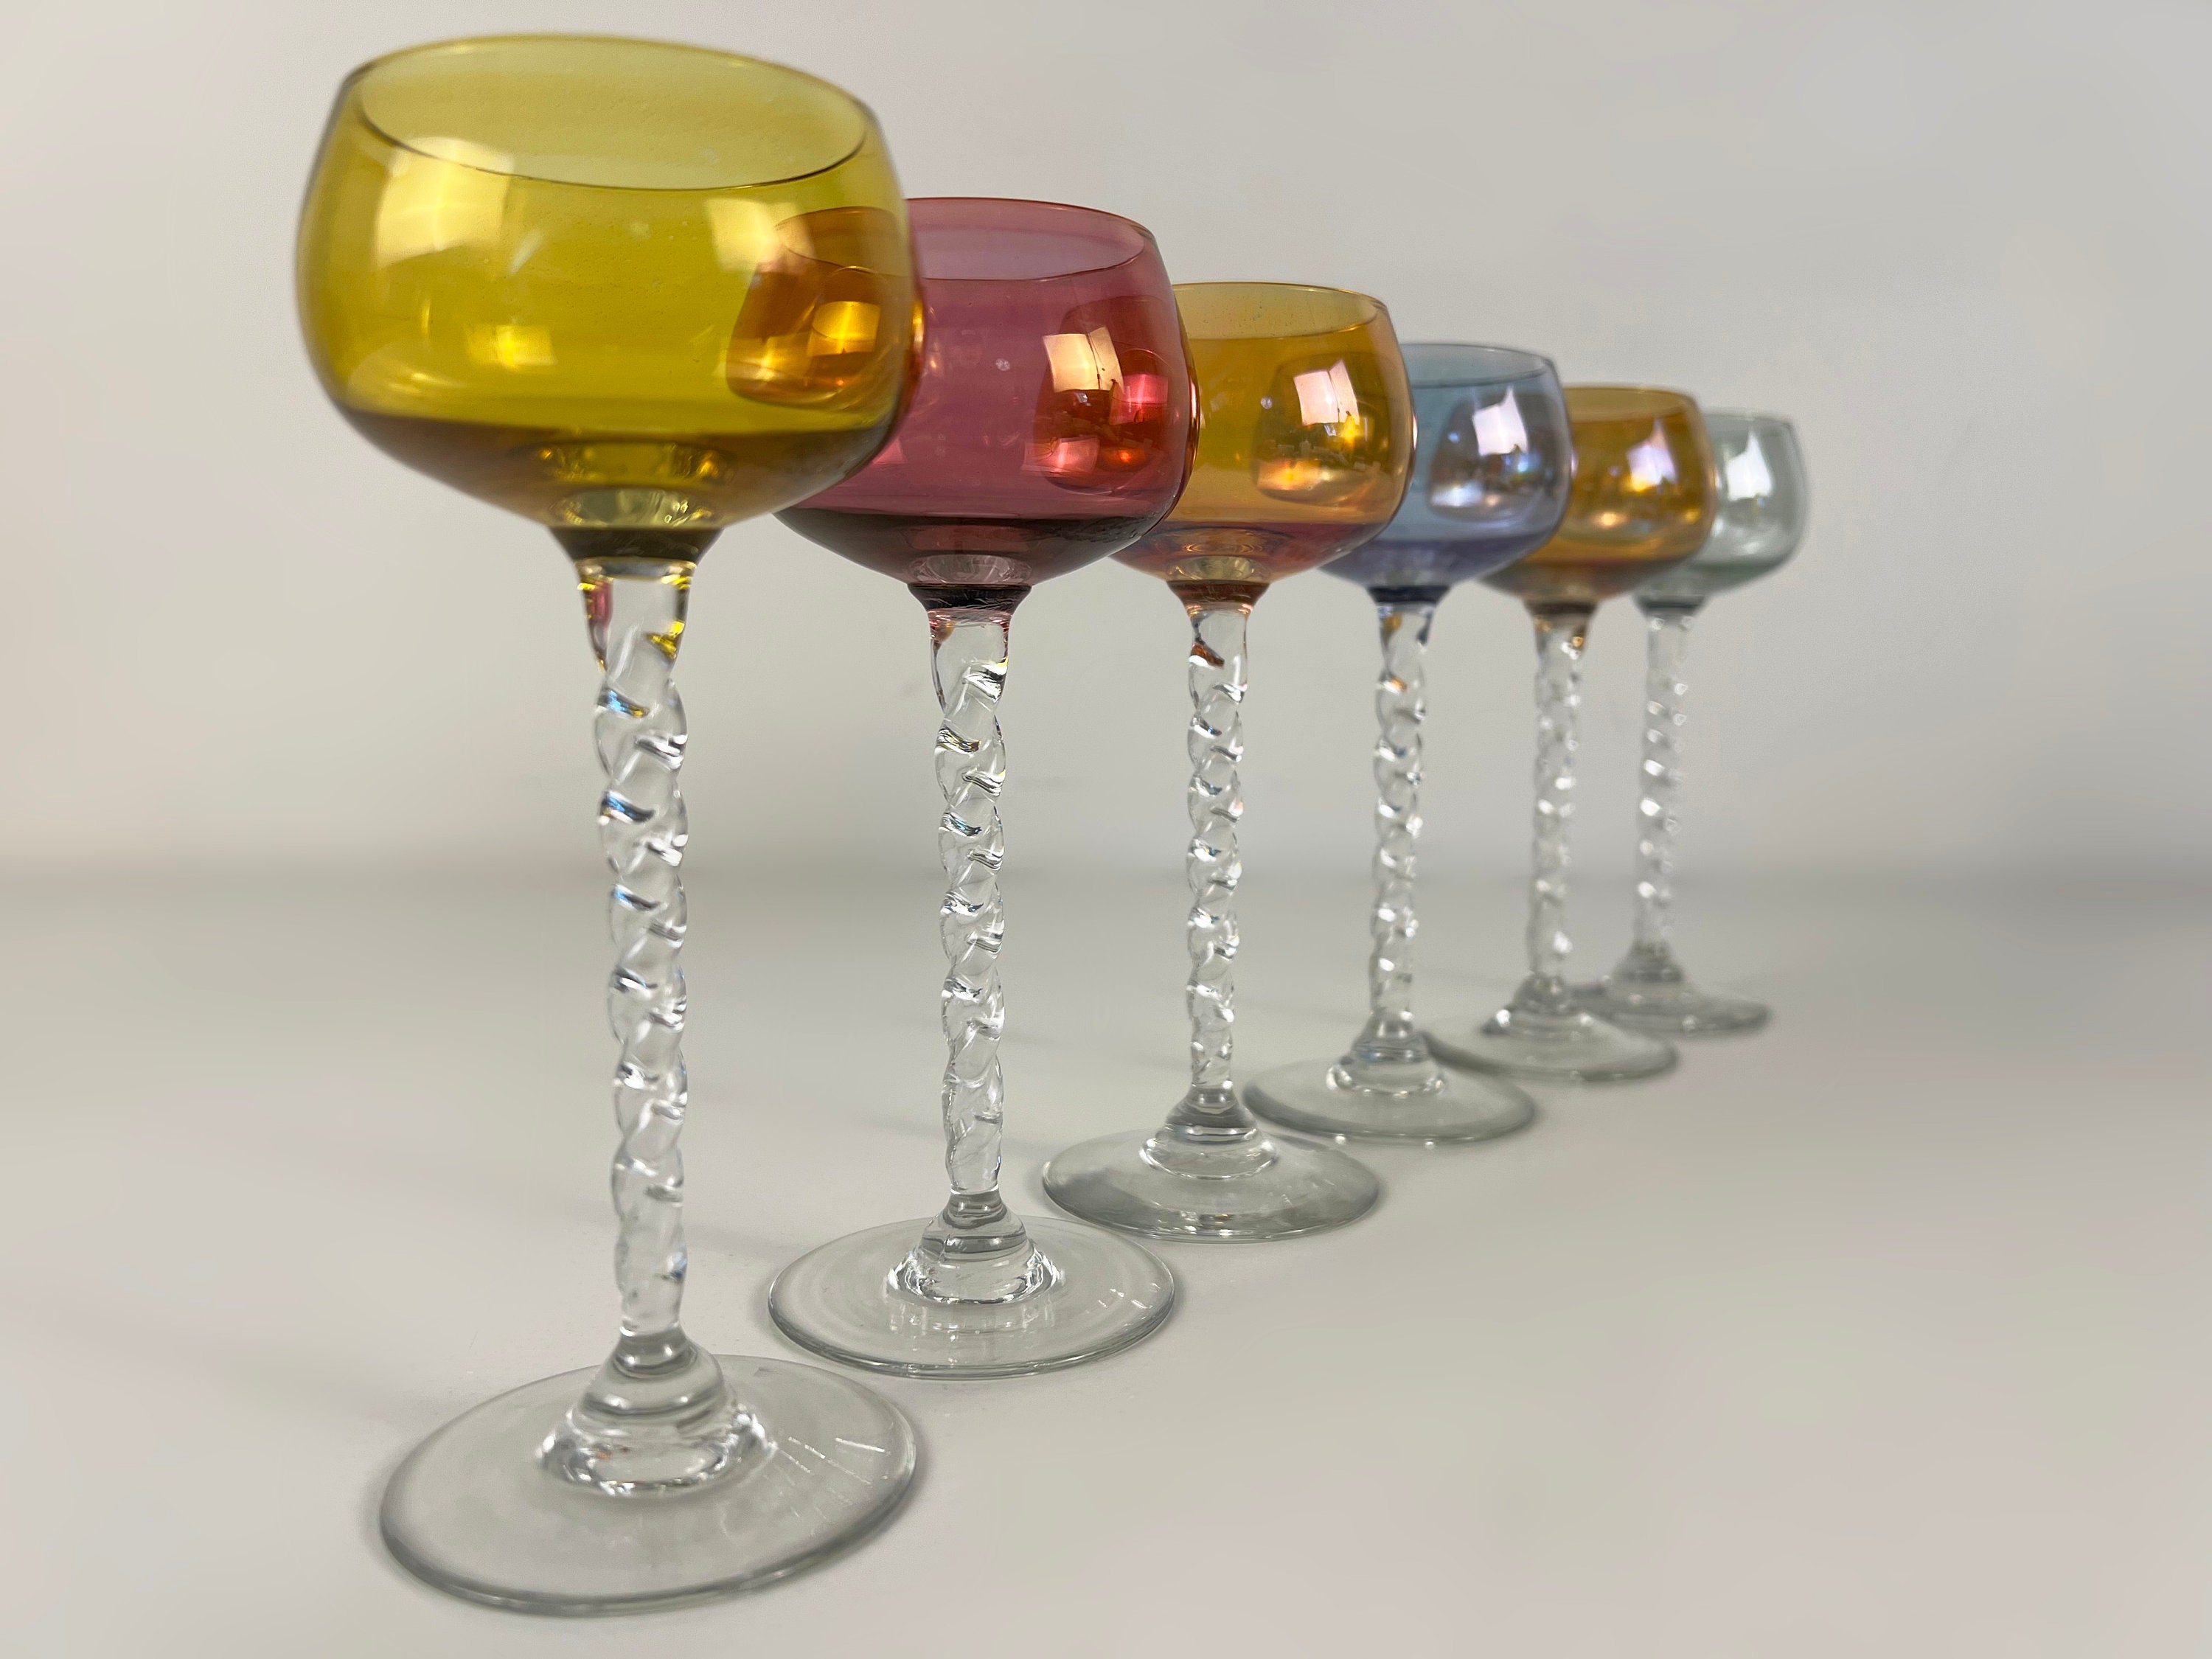 Dessert wine glasses – beautiful glasses for dessert wine